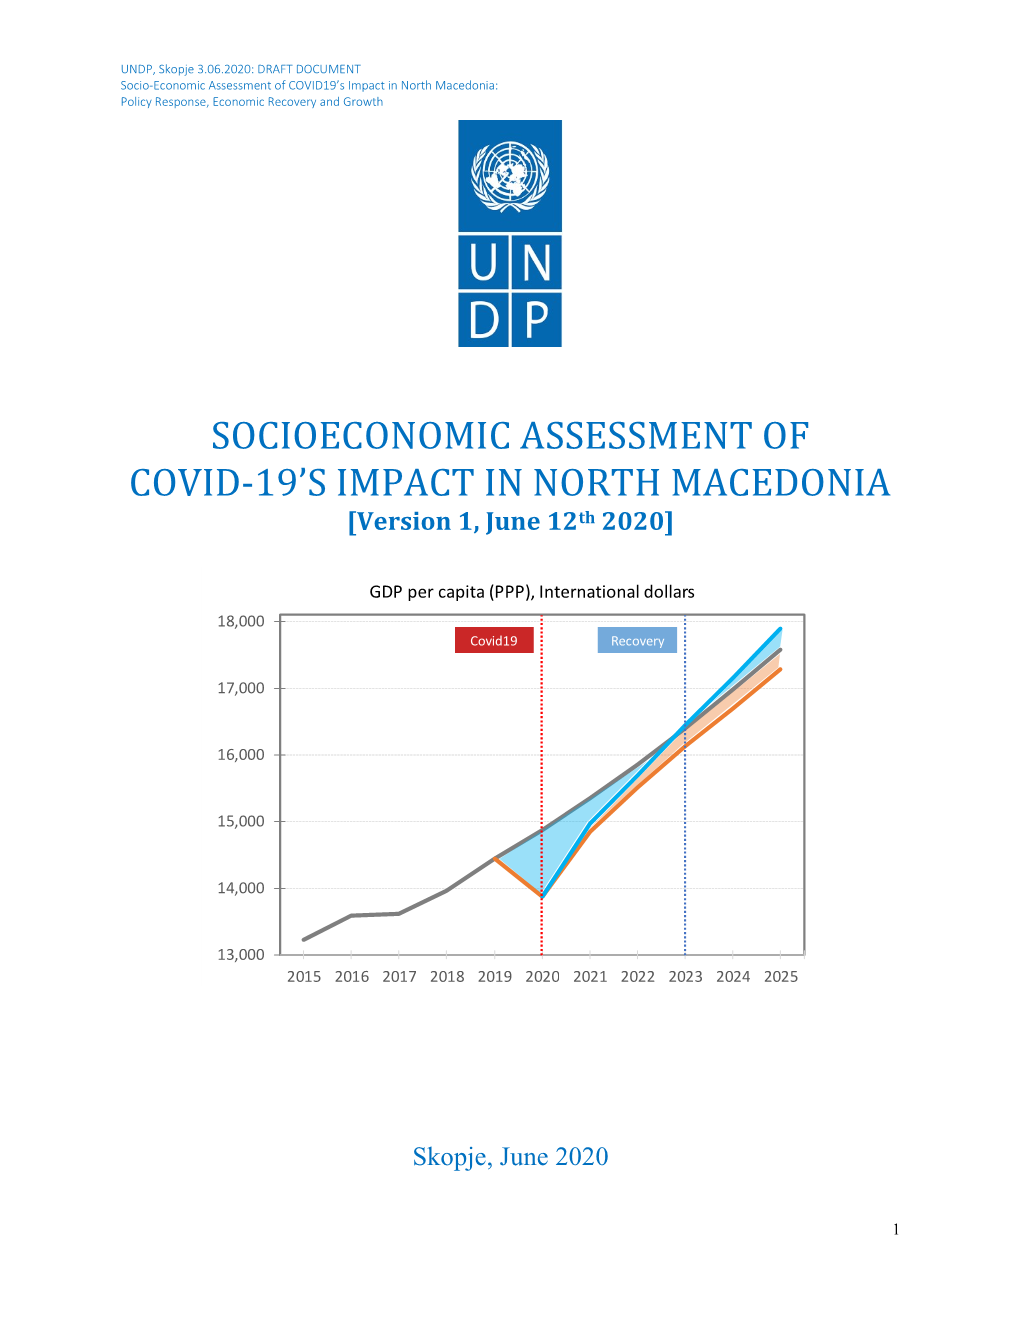 Socio-Economic Assessment of COVID-19 in North Macedonia